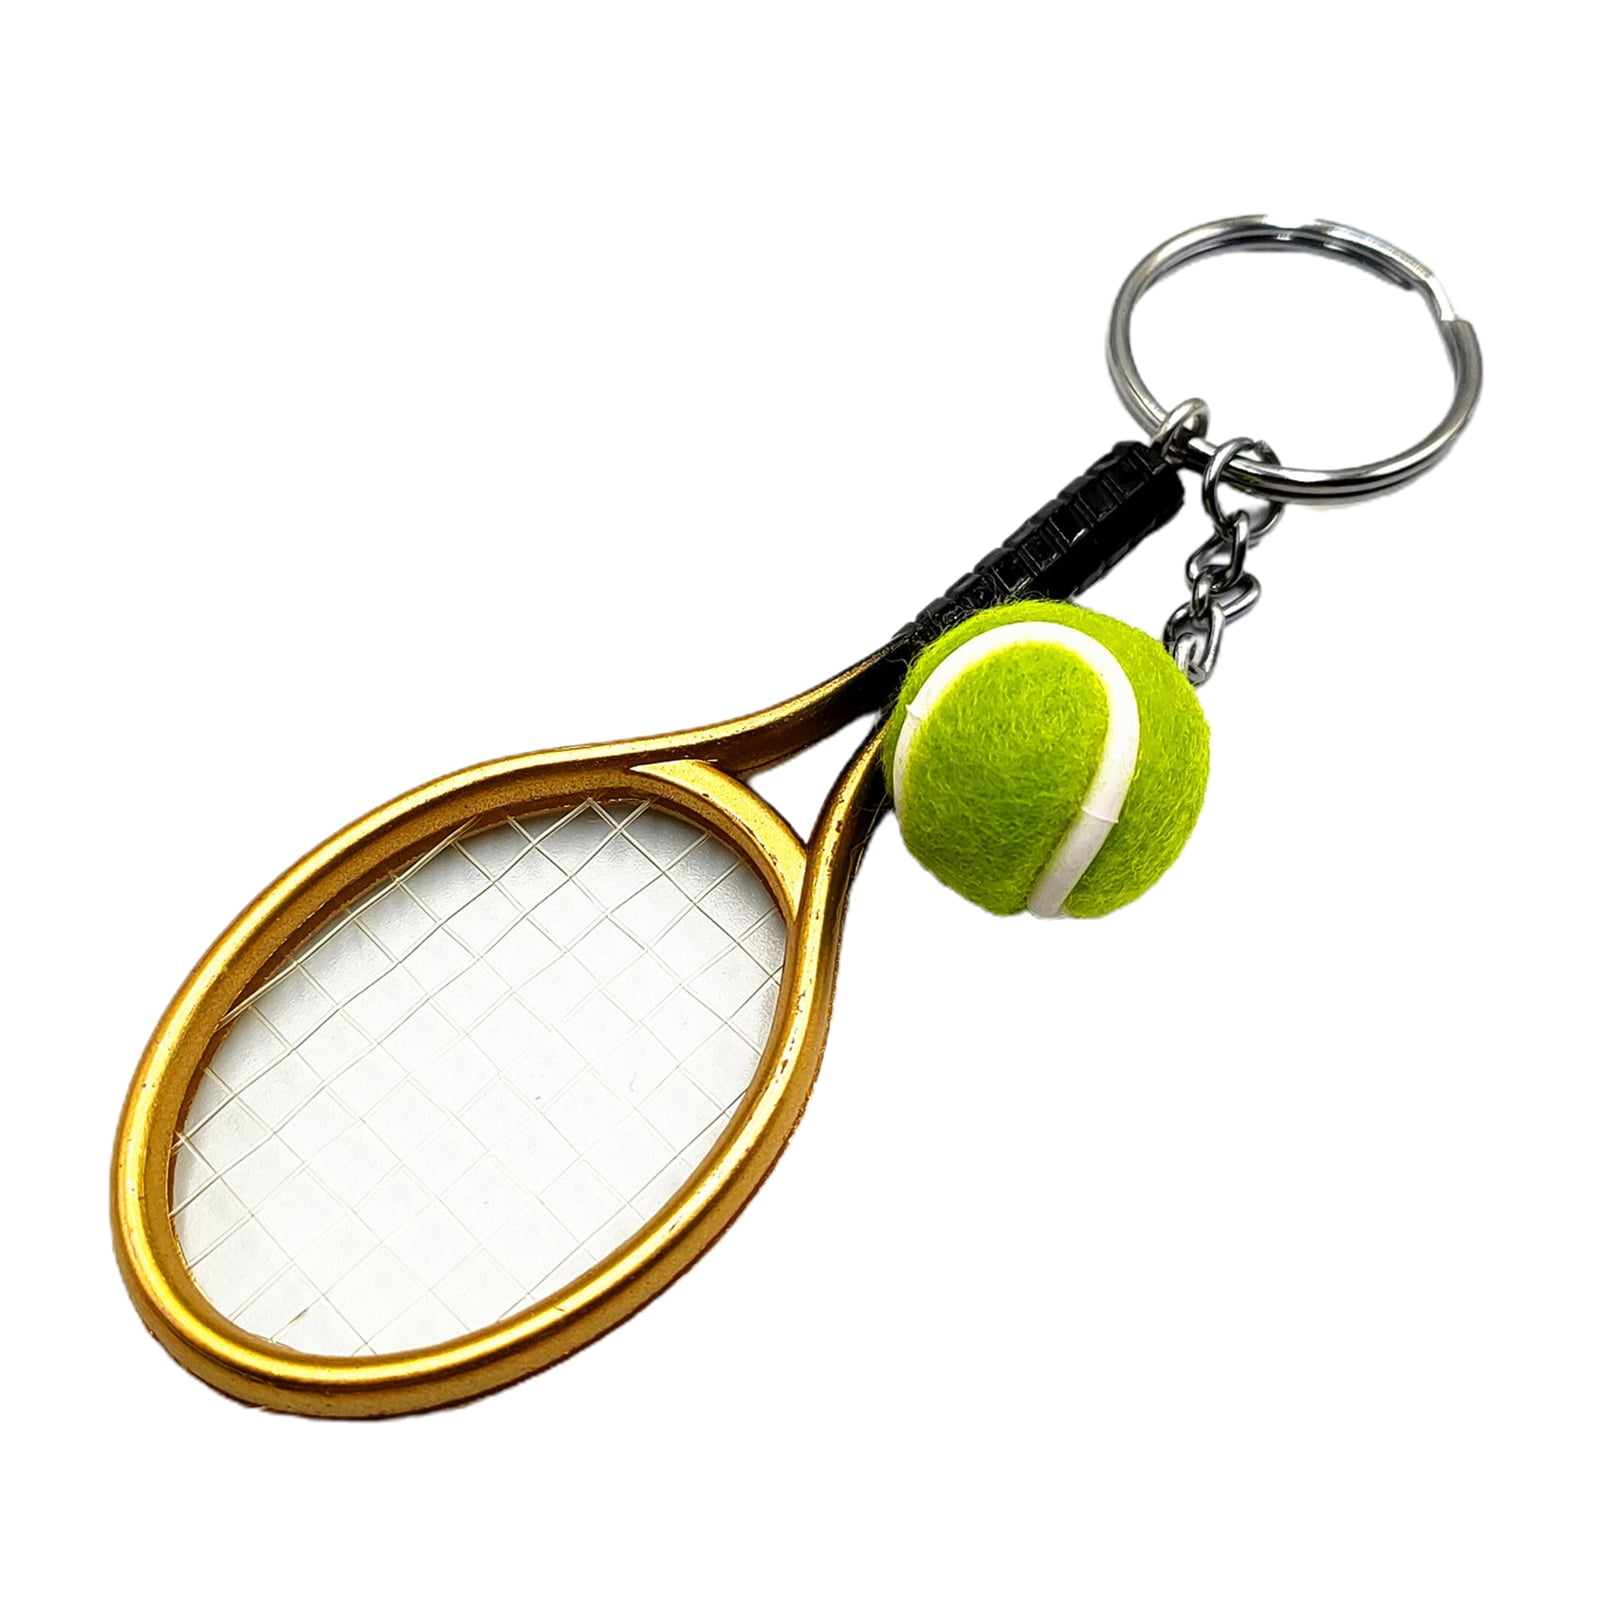 Hot Mini Tennis Ball Racket Charm Pendant Keyring Key Chain Sports Collectibles